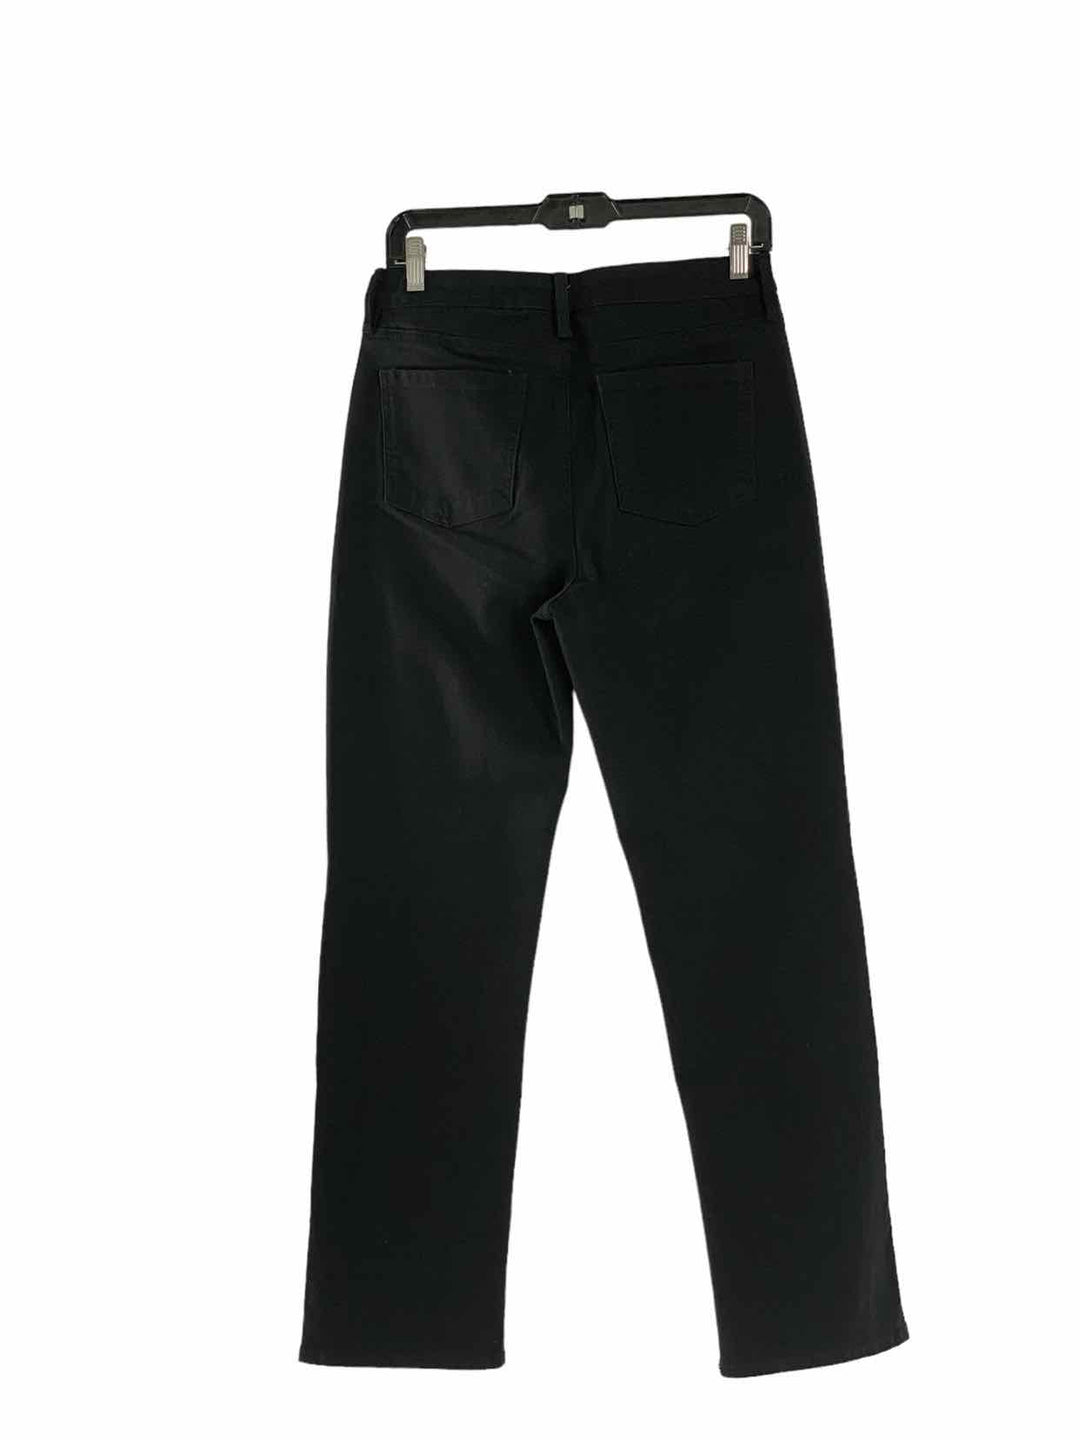 Buffalo David Bitton Size 6/28 Black Stretch Jeans